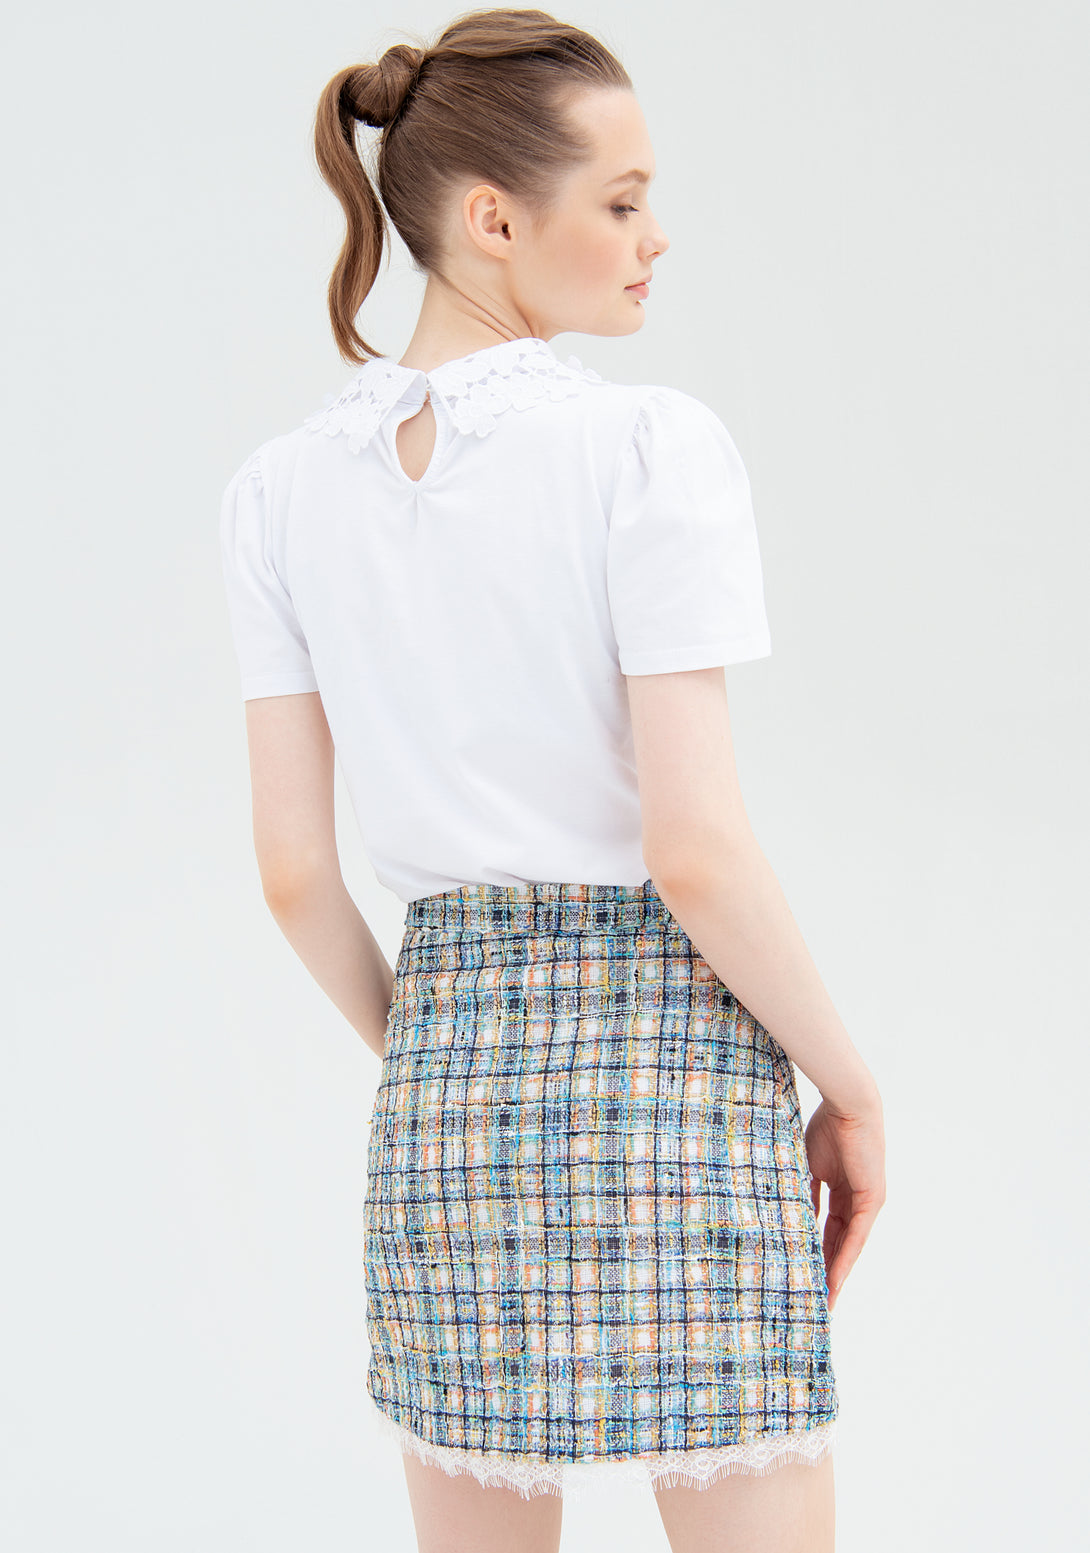 Mini sheath skirt slim fit made in tweed